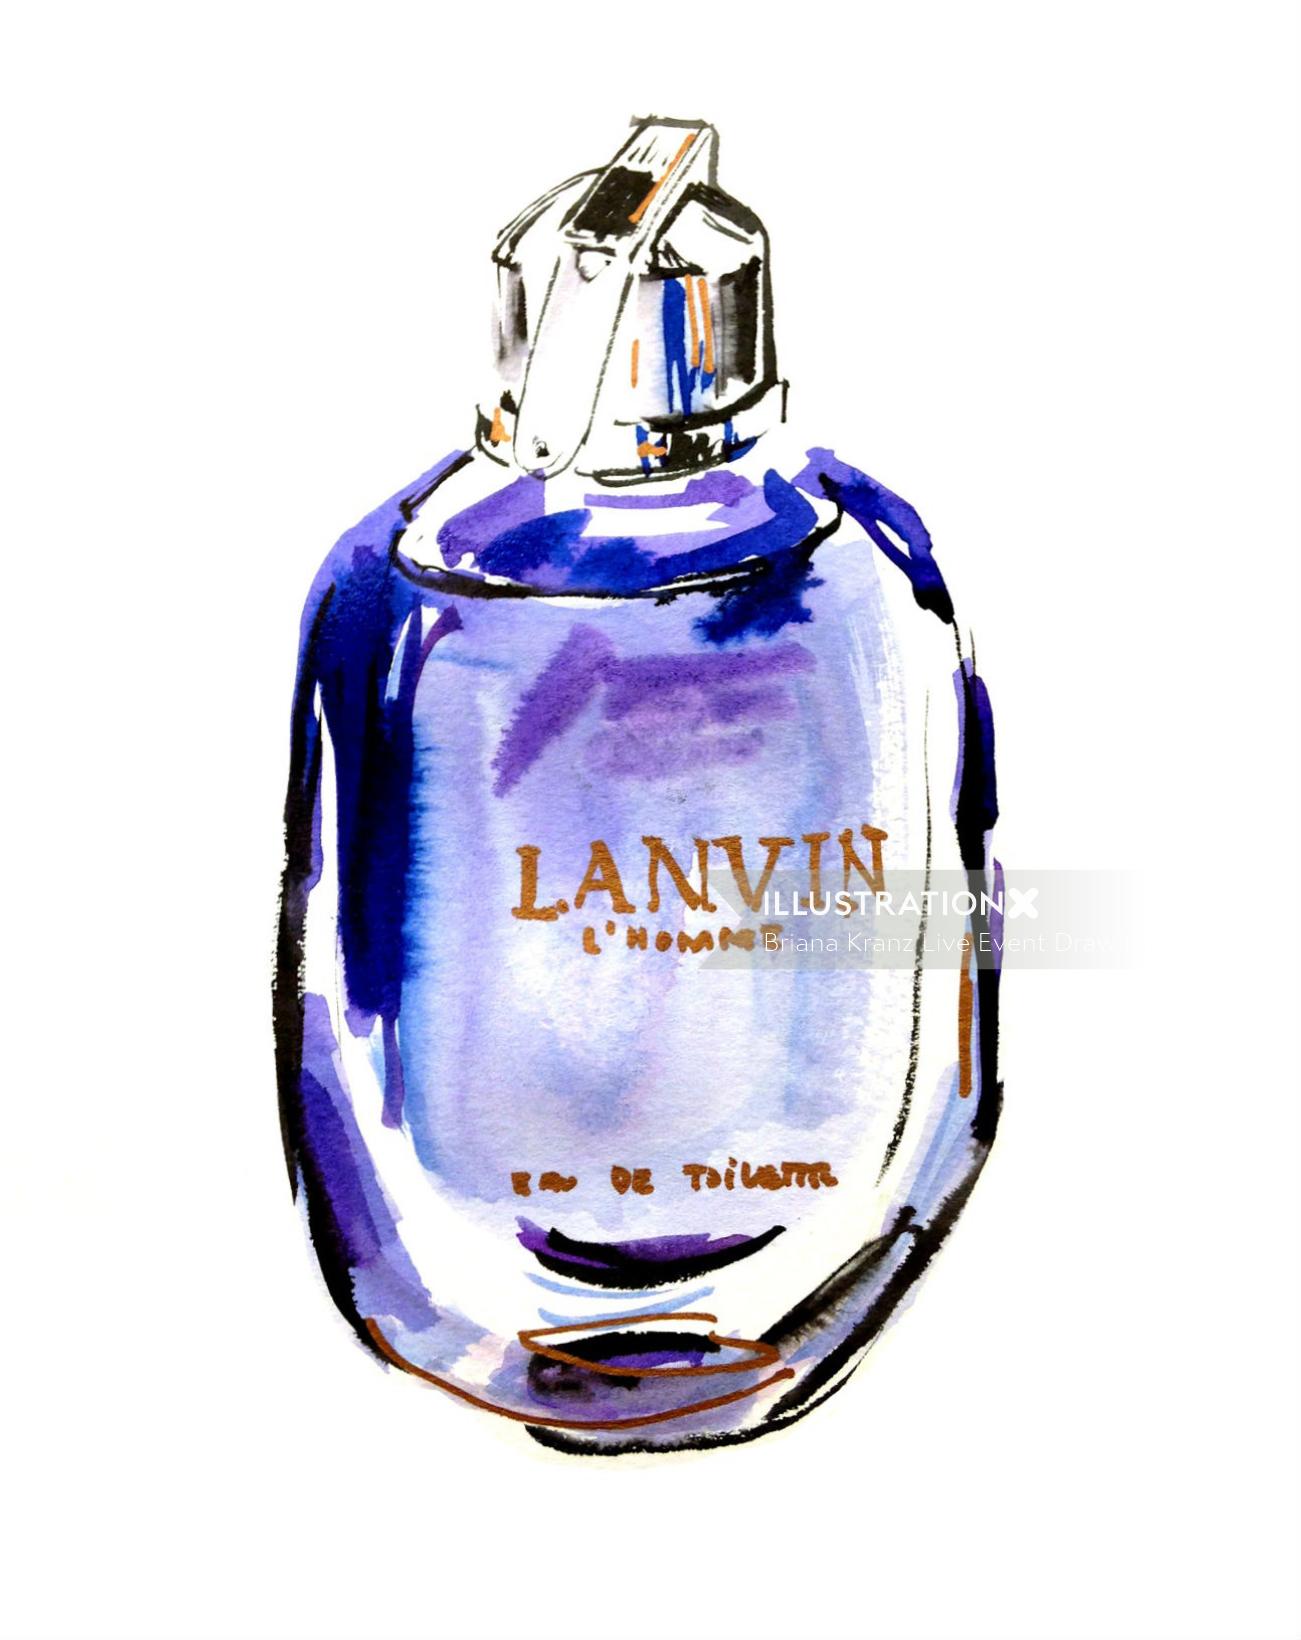 An Illustration For Lanvin L'homme Perfume